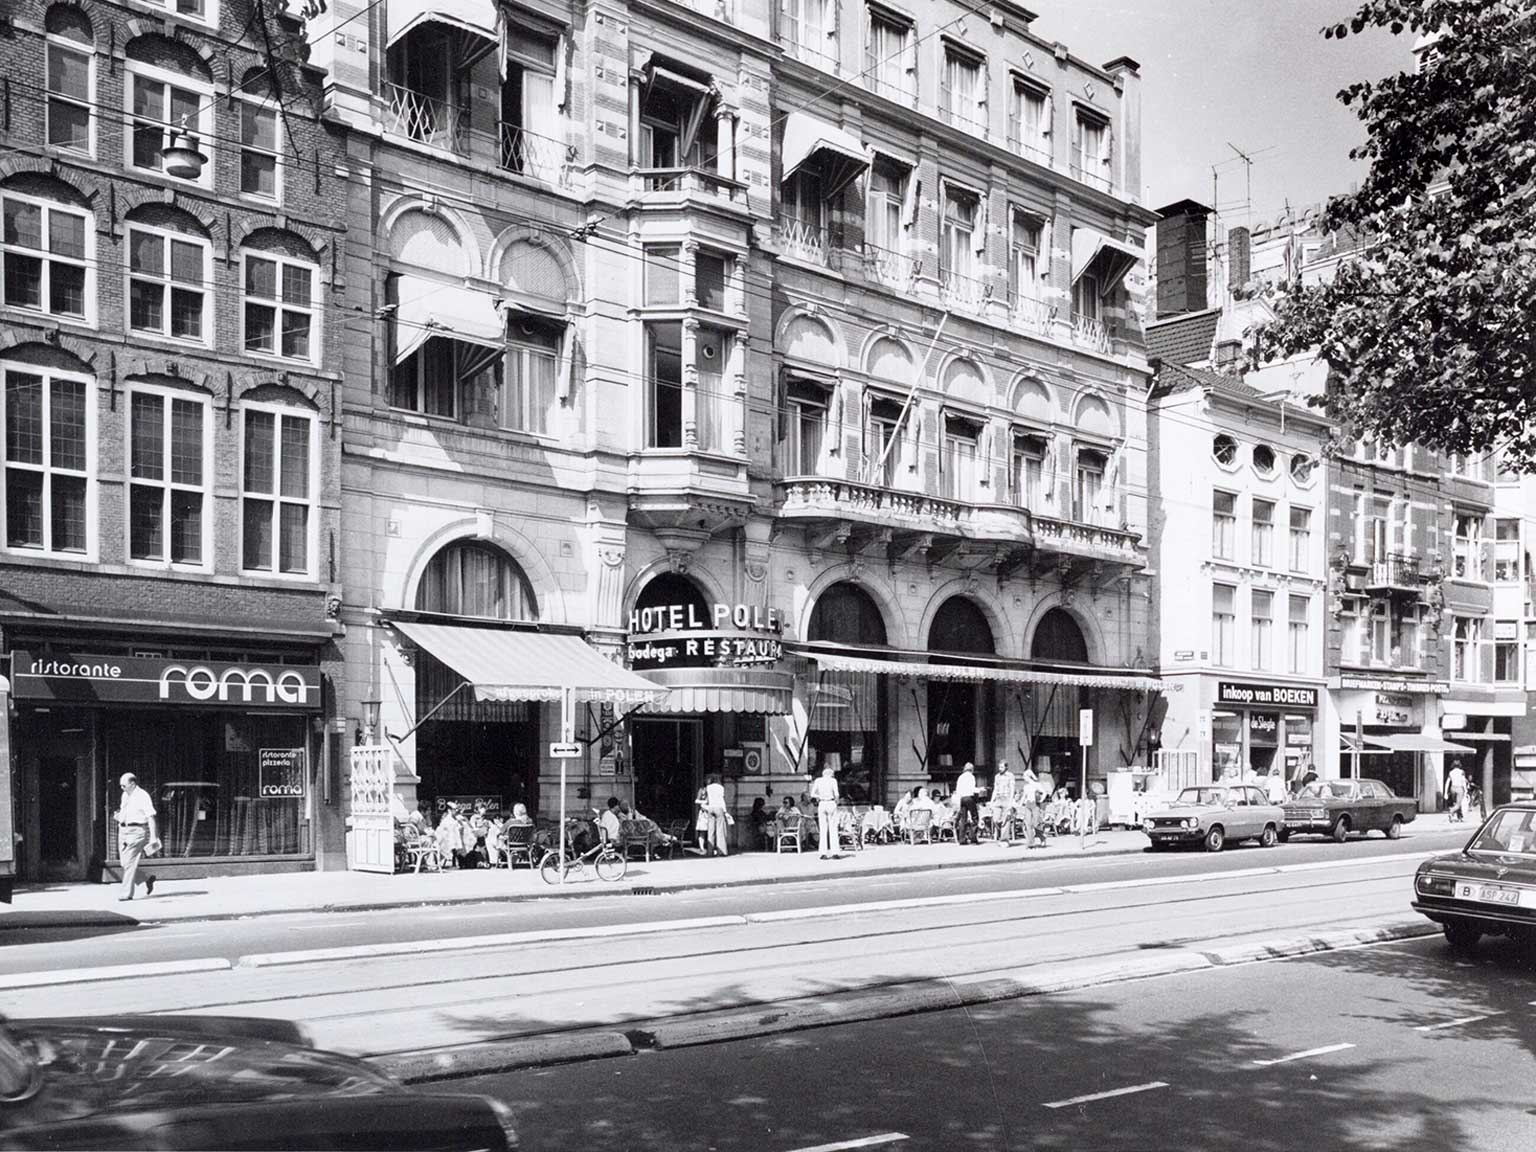 Hotel Polen op Rokin 14, Amsterdam, in augustus 1974